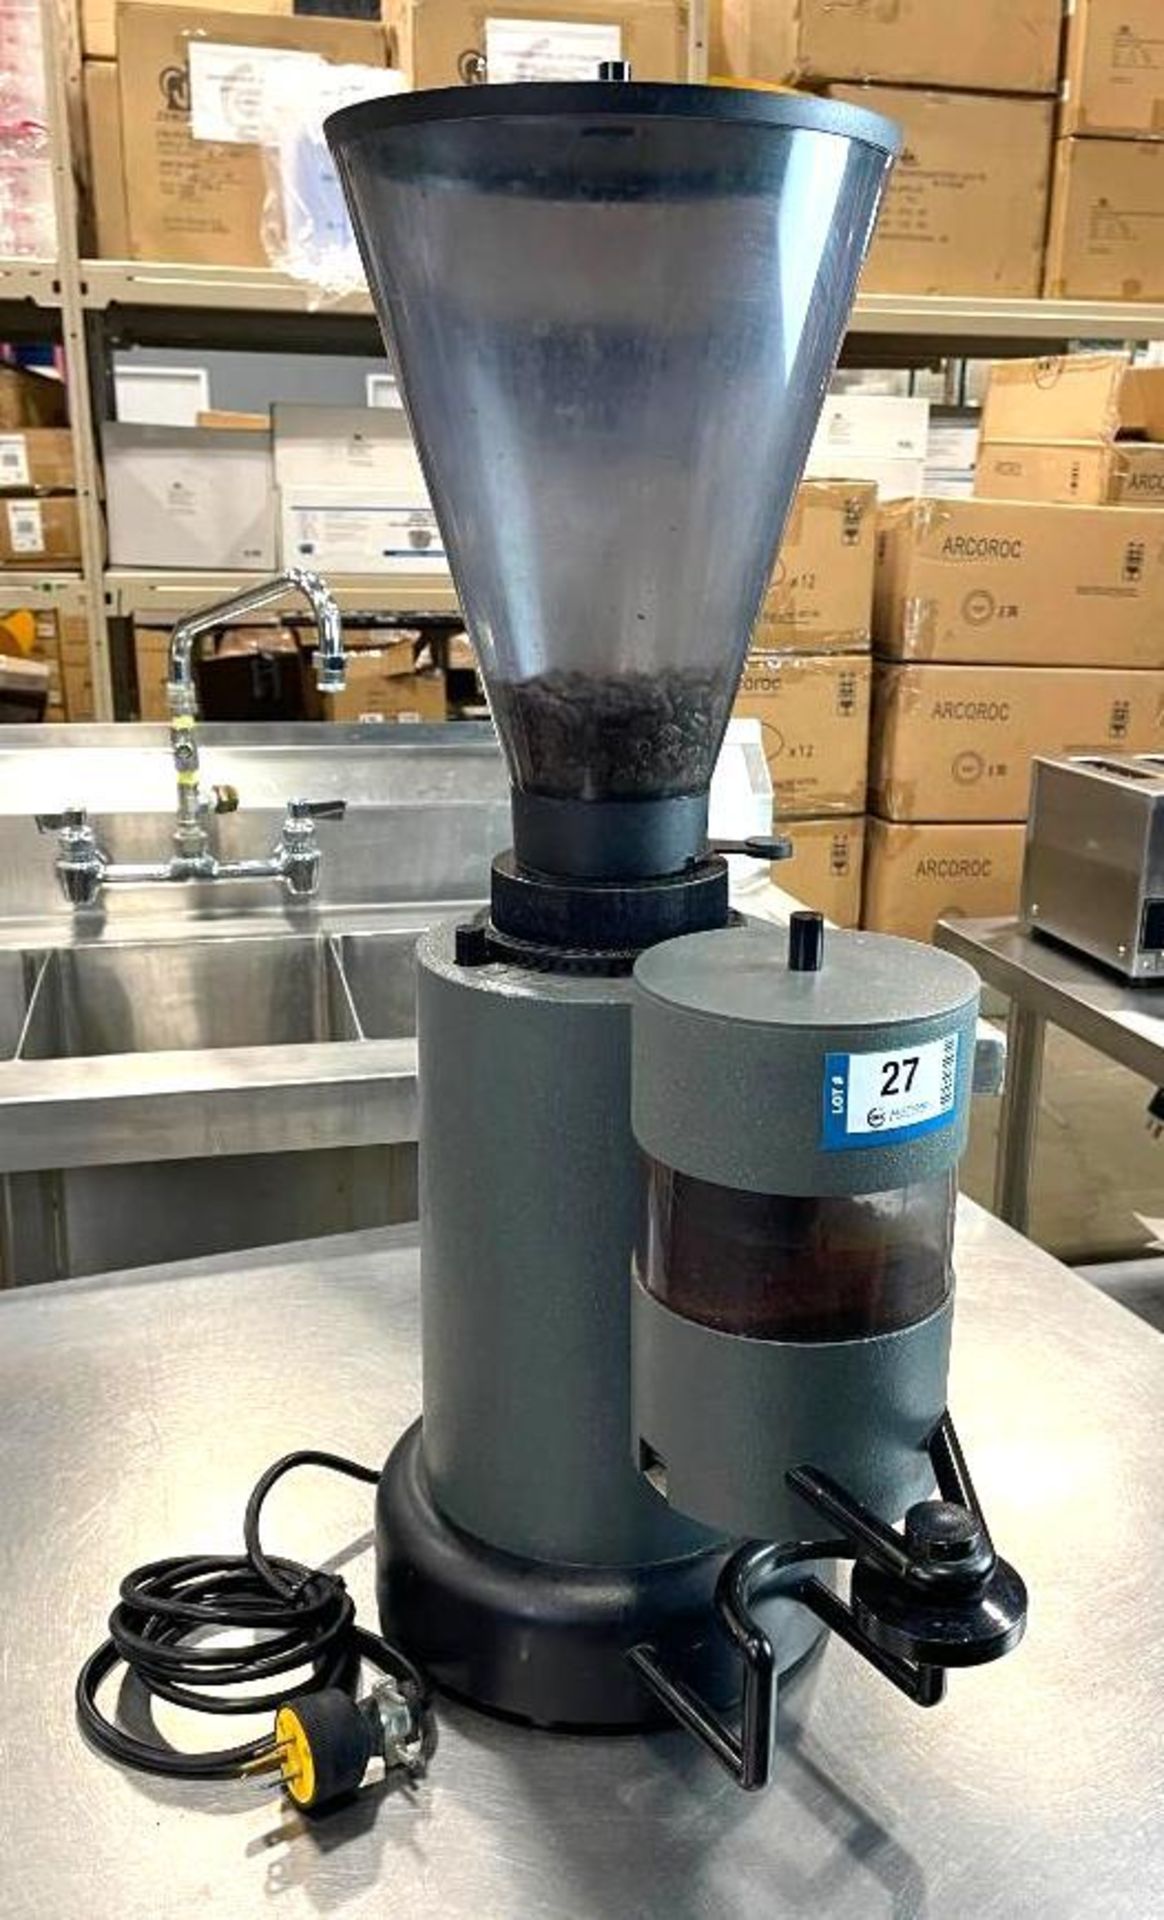 FAEMA A6 COFFEE GRINDER - Image 7 of 7